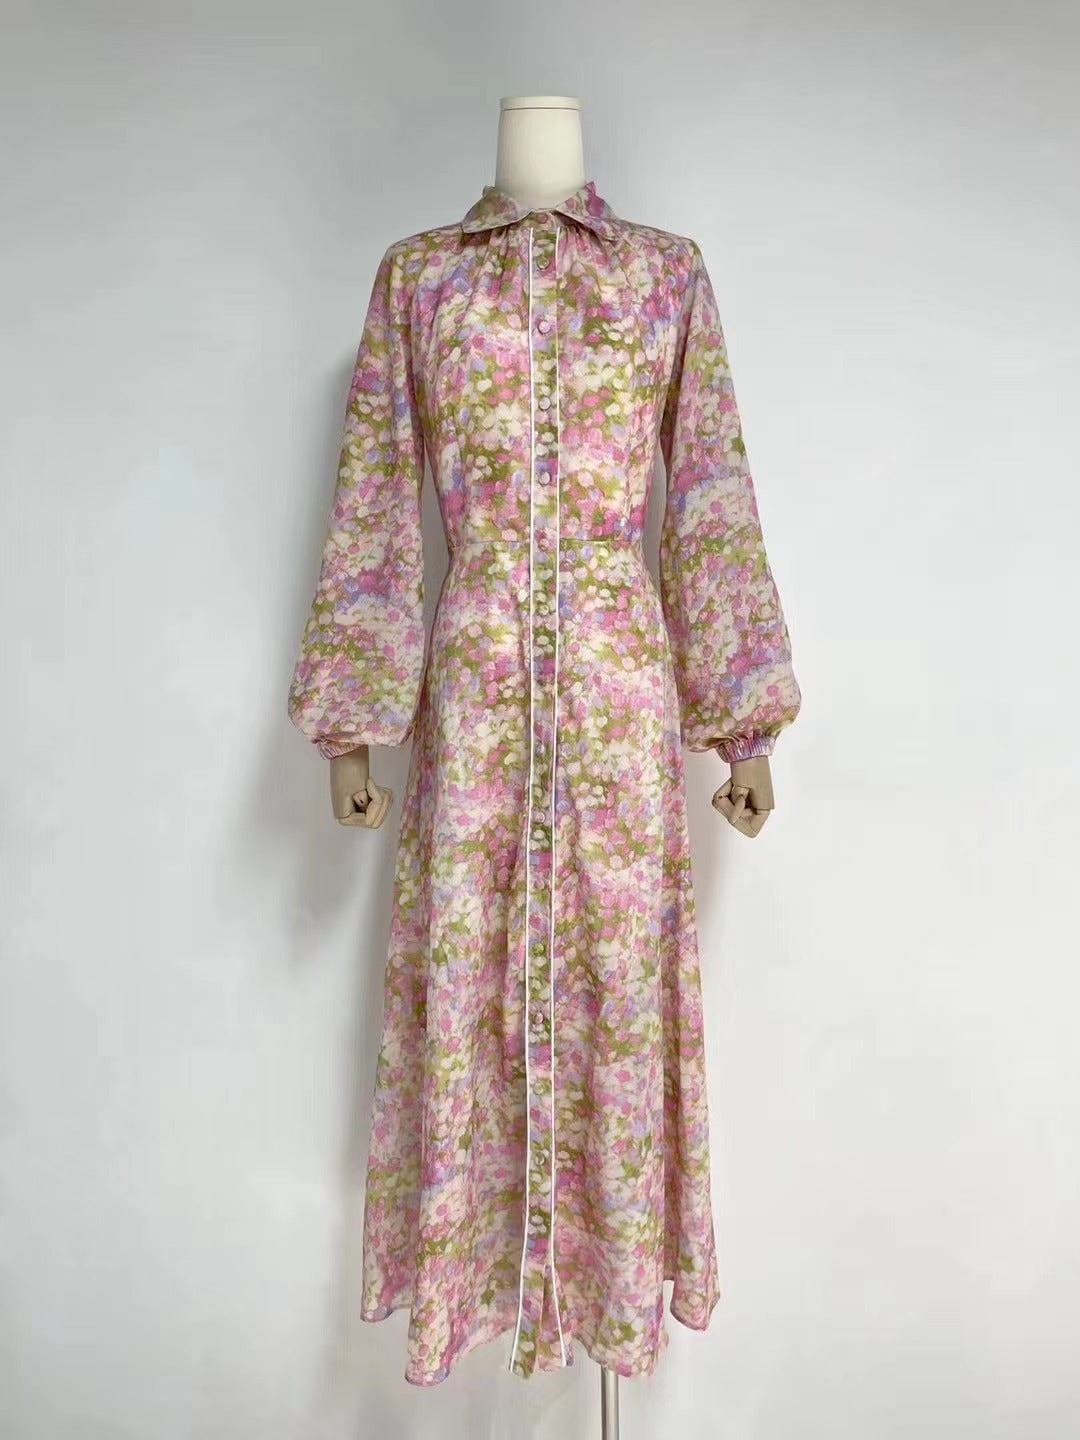 Women Spring Fall Collared Printed Long Sleeve Bohomian Elegant A Line Dress Shirt Dress Maxi Dress